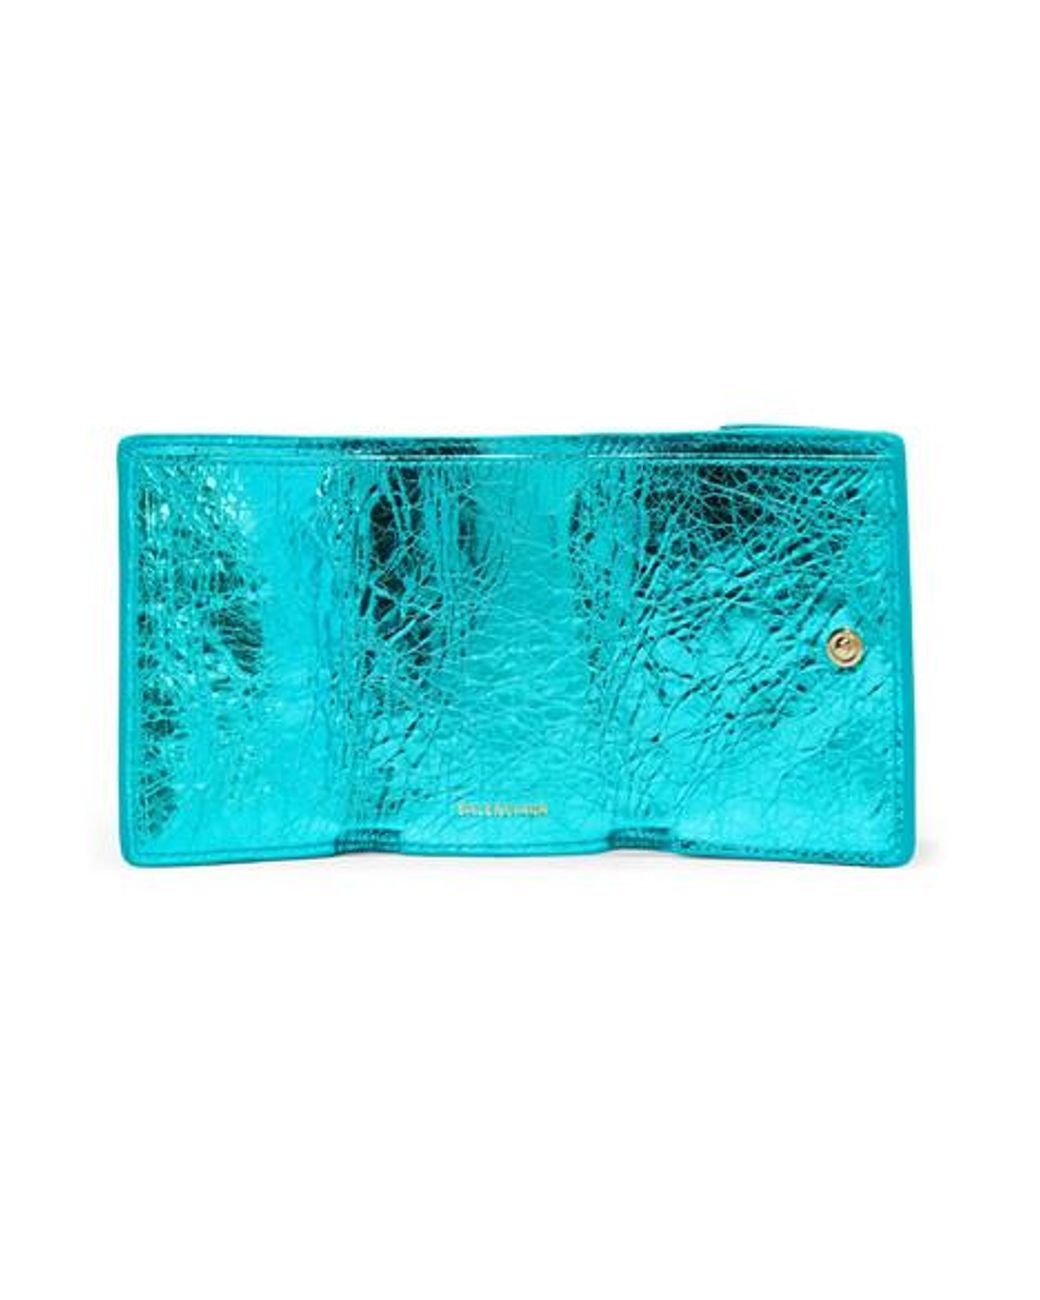 Balenciaga Women's Blue Papier Wallet Metallic Effect